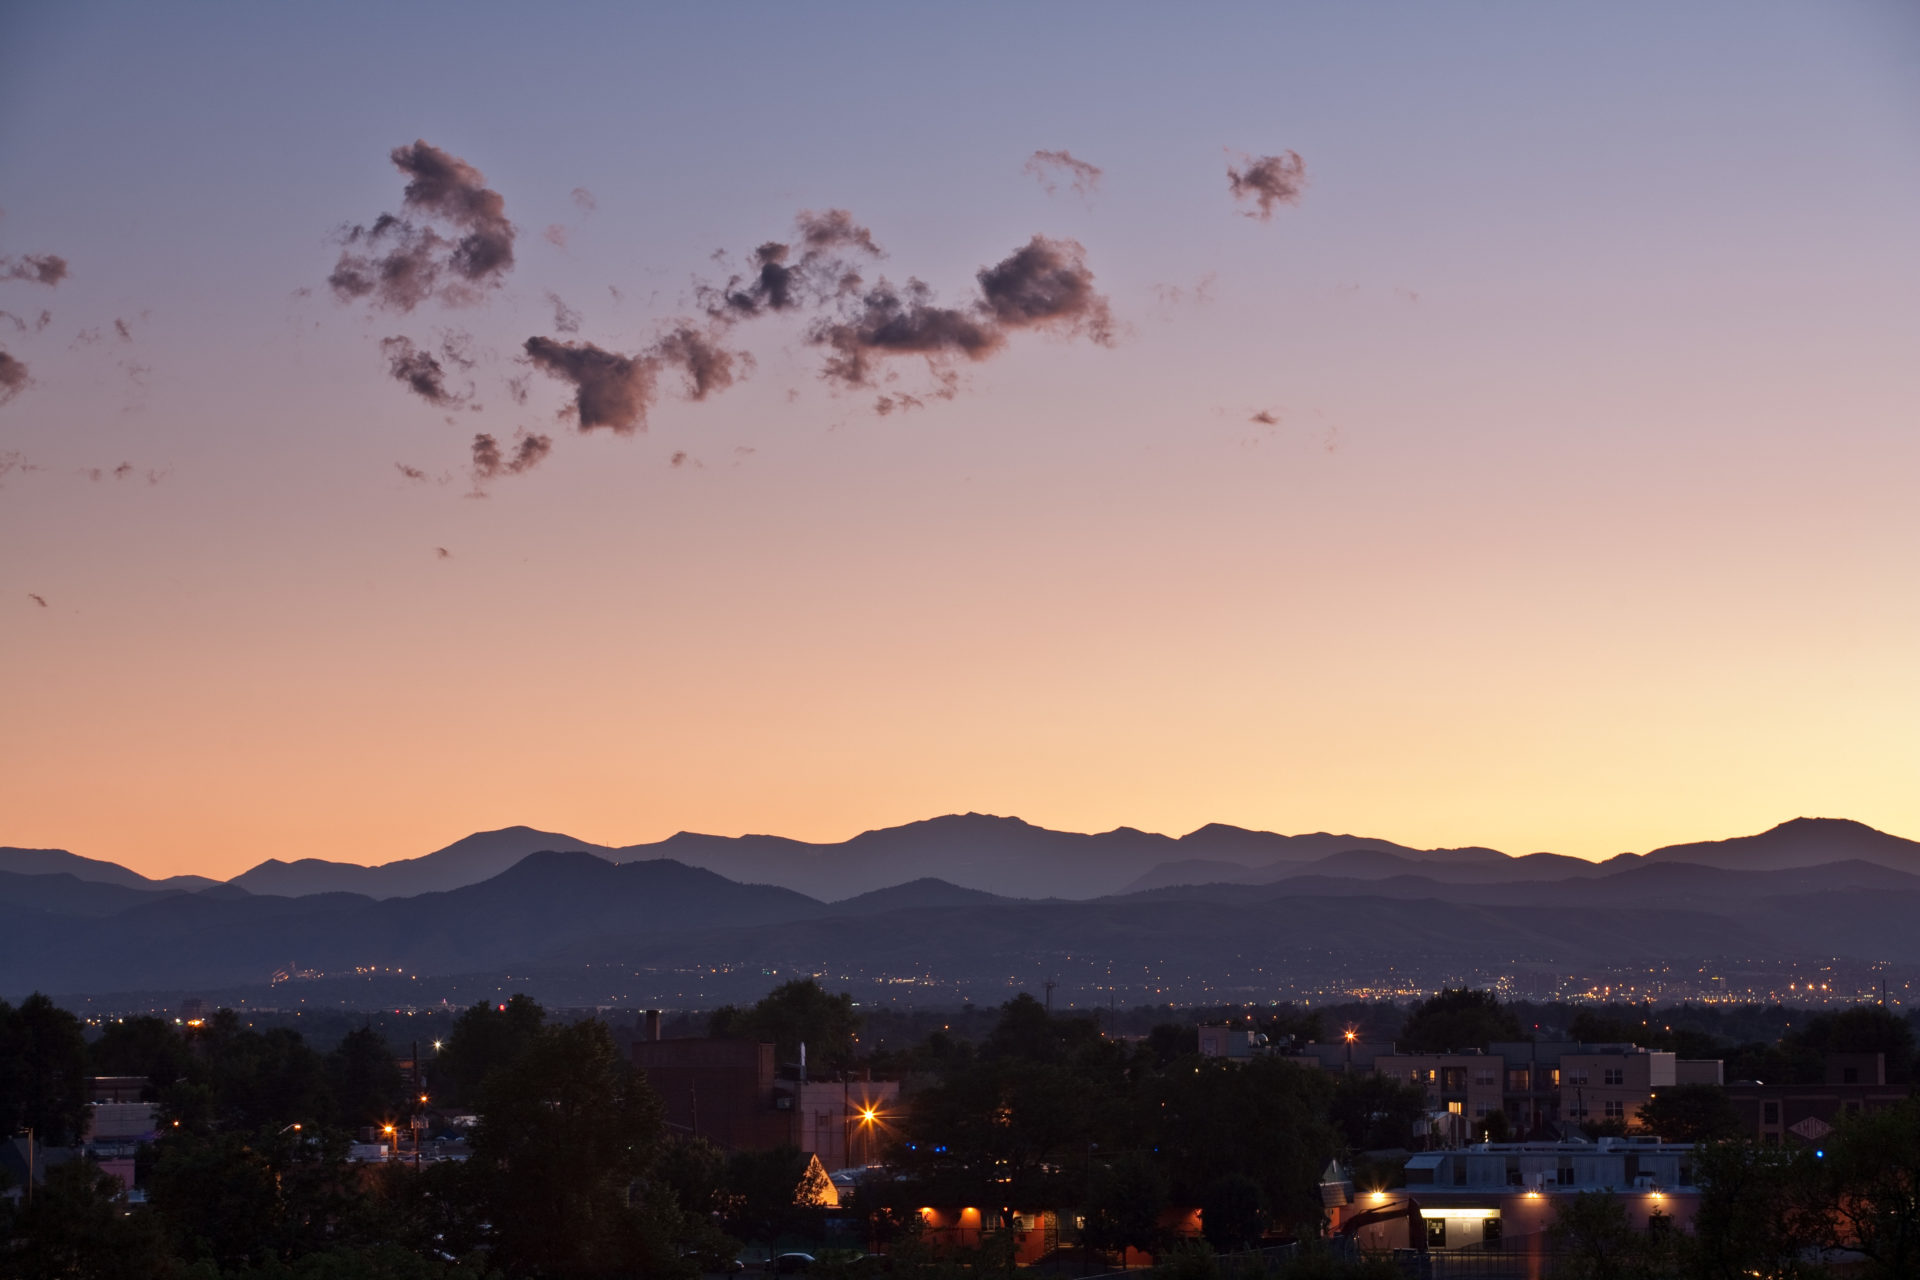 Mount Evans Sunset - August 6, 2011